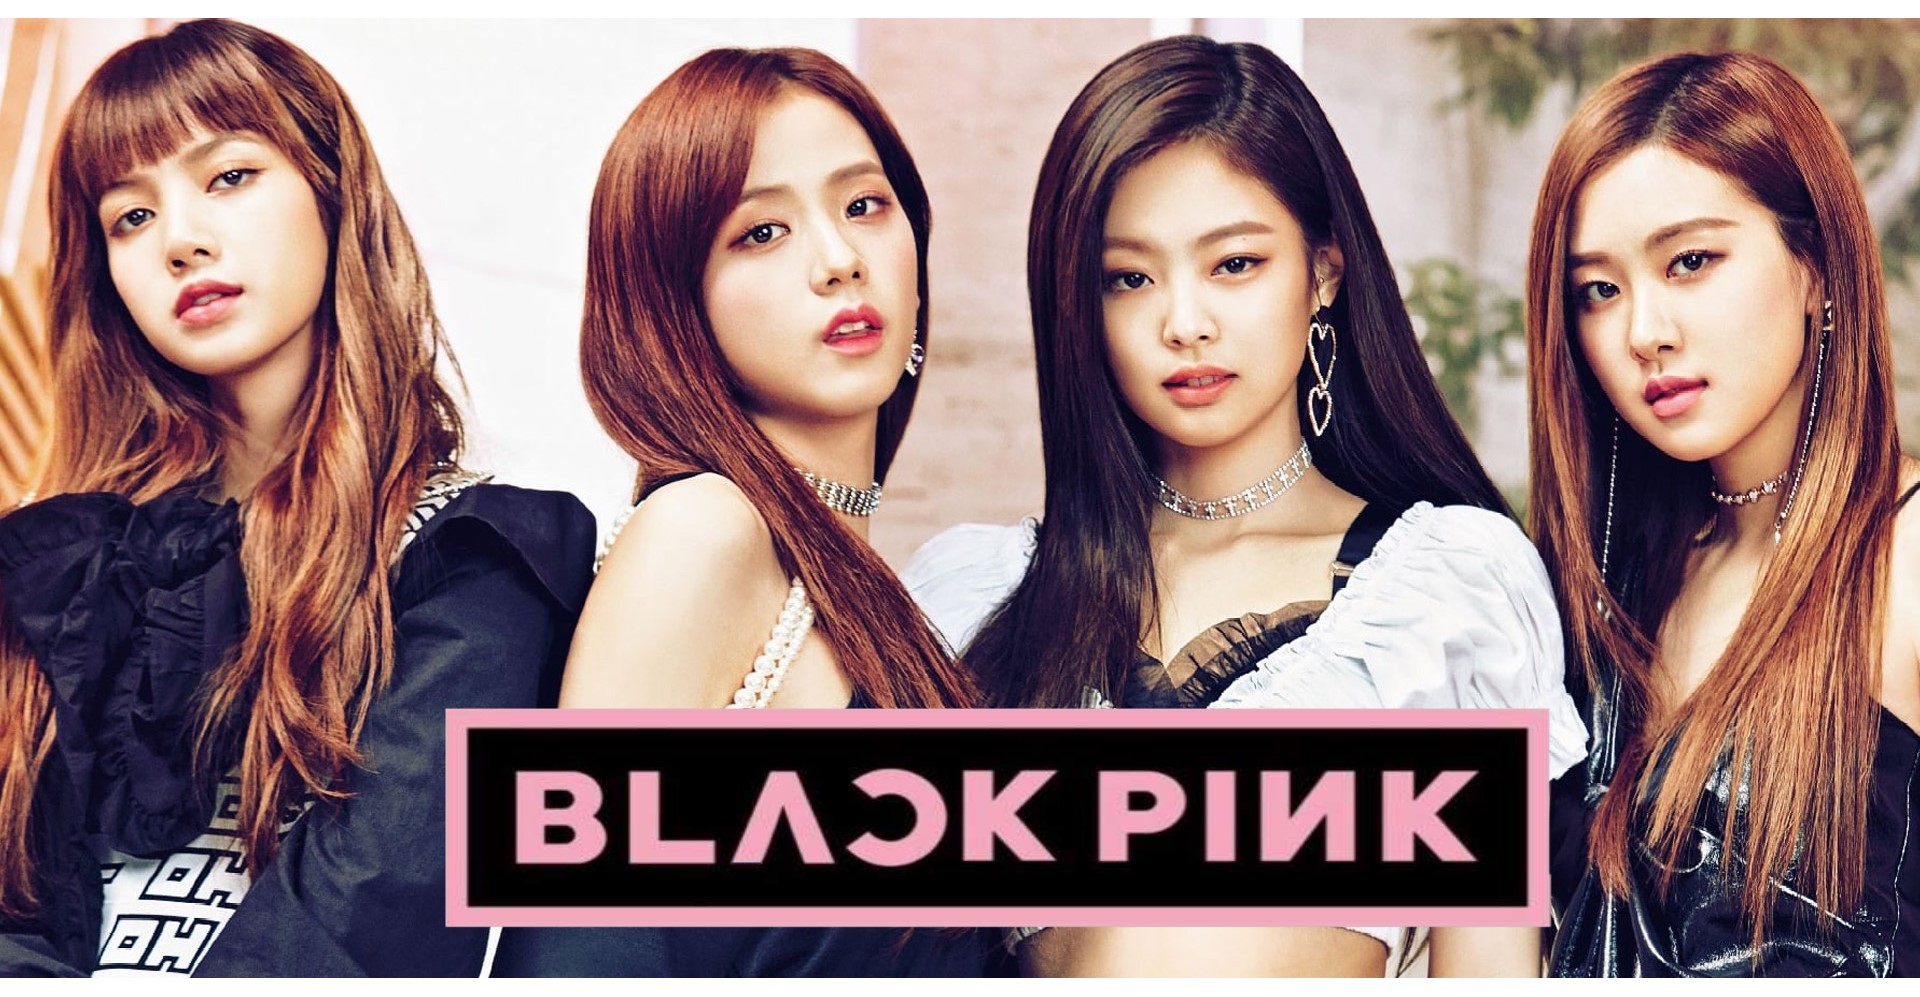 Blackpink Superstar girl group in Kpop